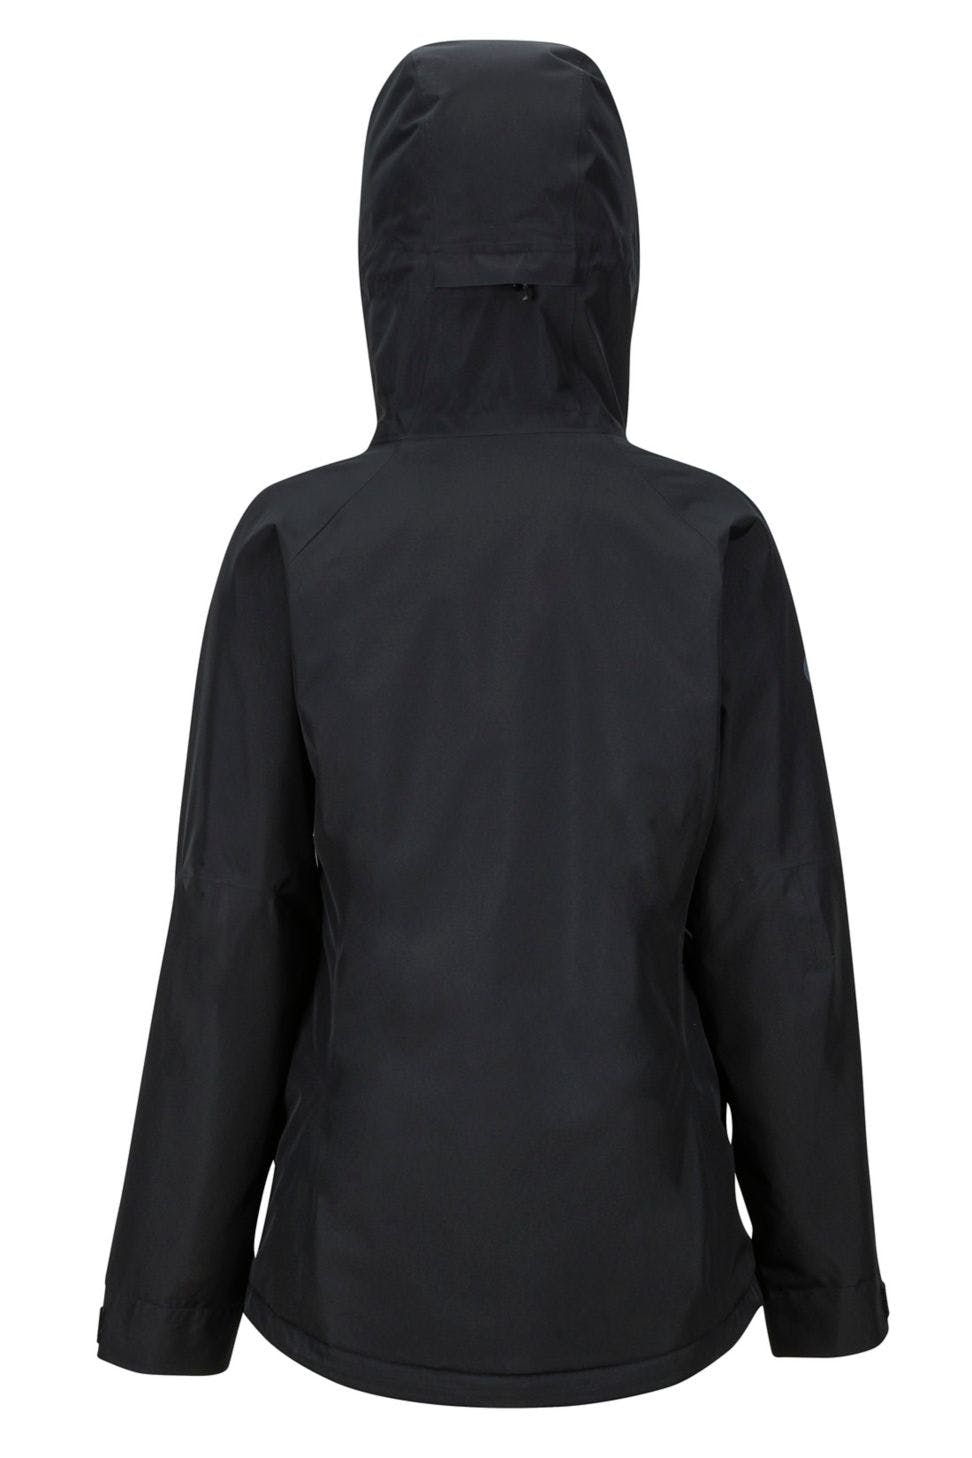 Marmot Women's Lightray GORE-TEX 2L Insulated Jacket